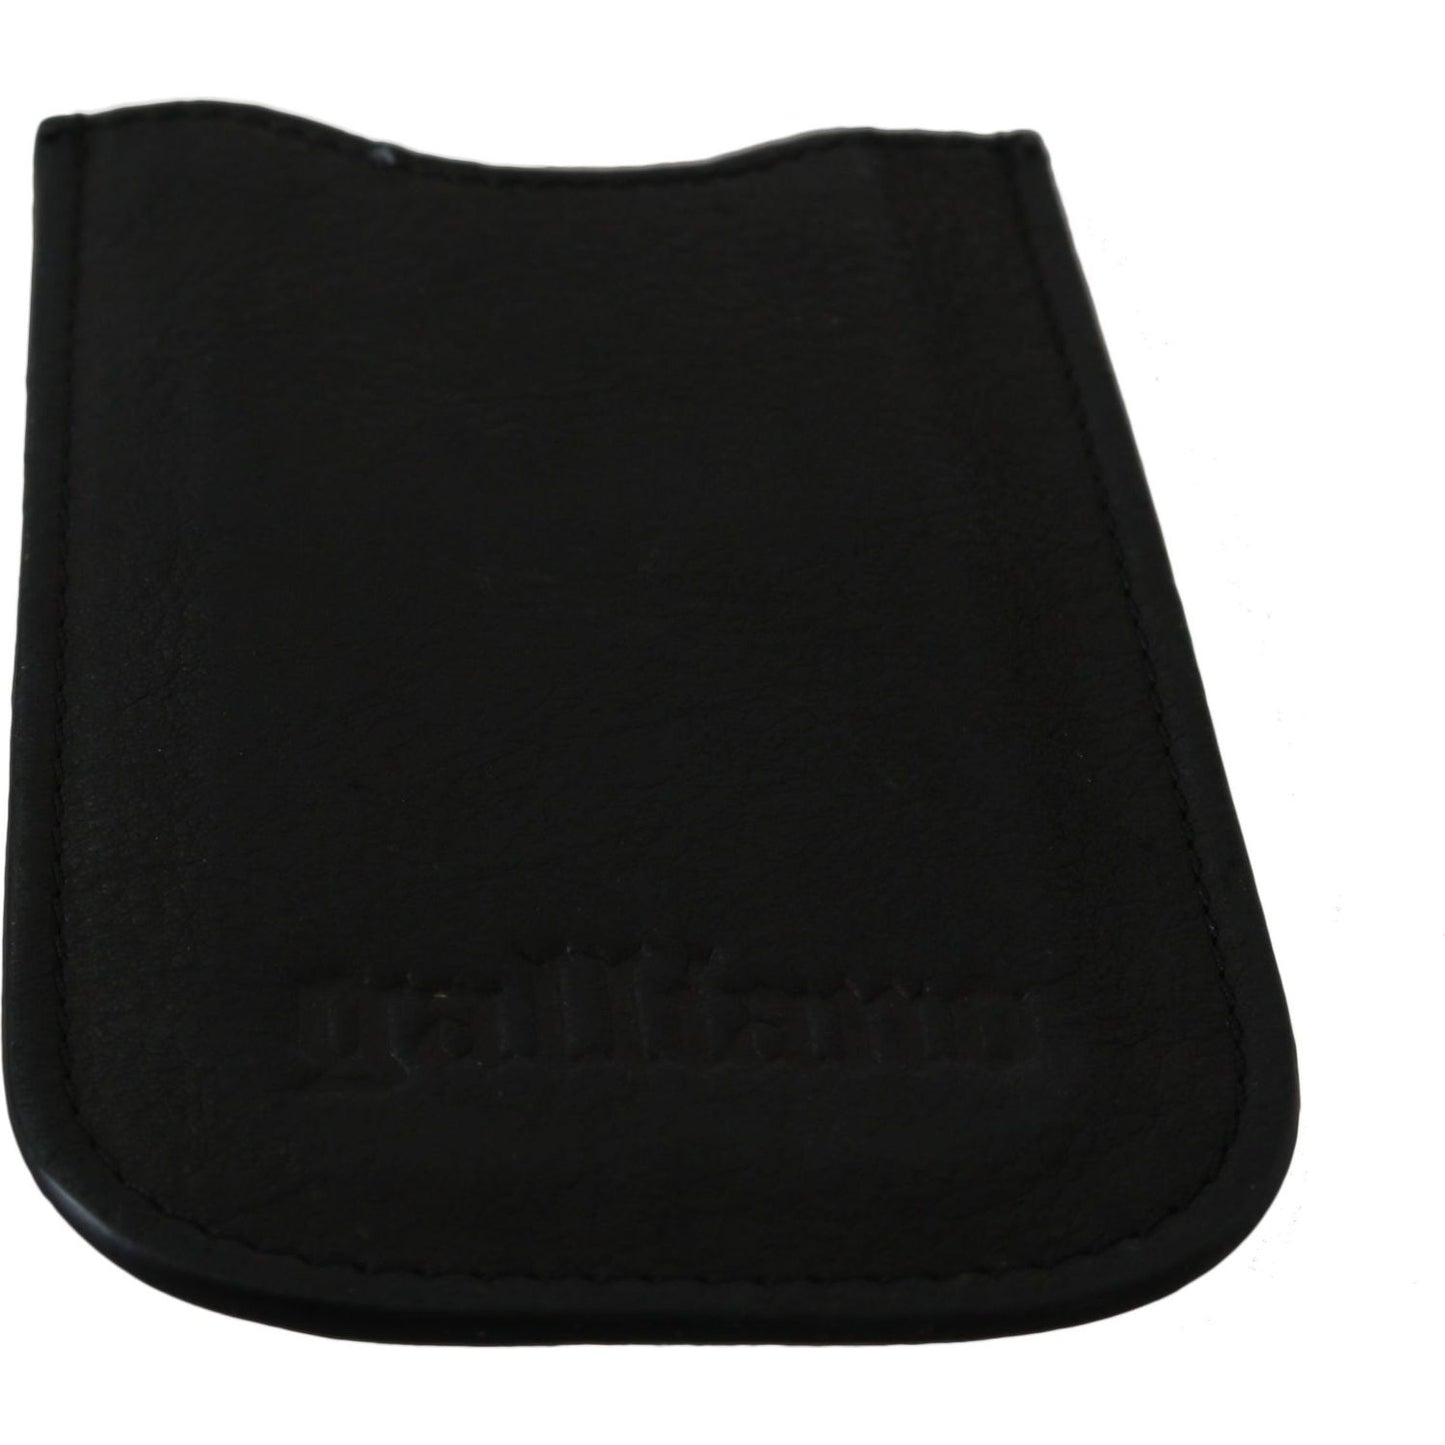 John Galliano Elegant Black Genuine Leather Men's Wallet black-leather-multifunctional-men-id-bill-card-holder-wallet Wallet IMG_1776-scaled-038b5f25-49e.jpg